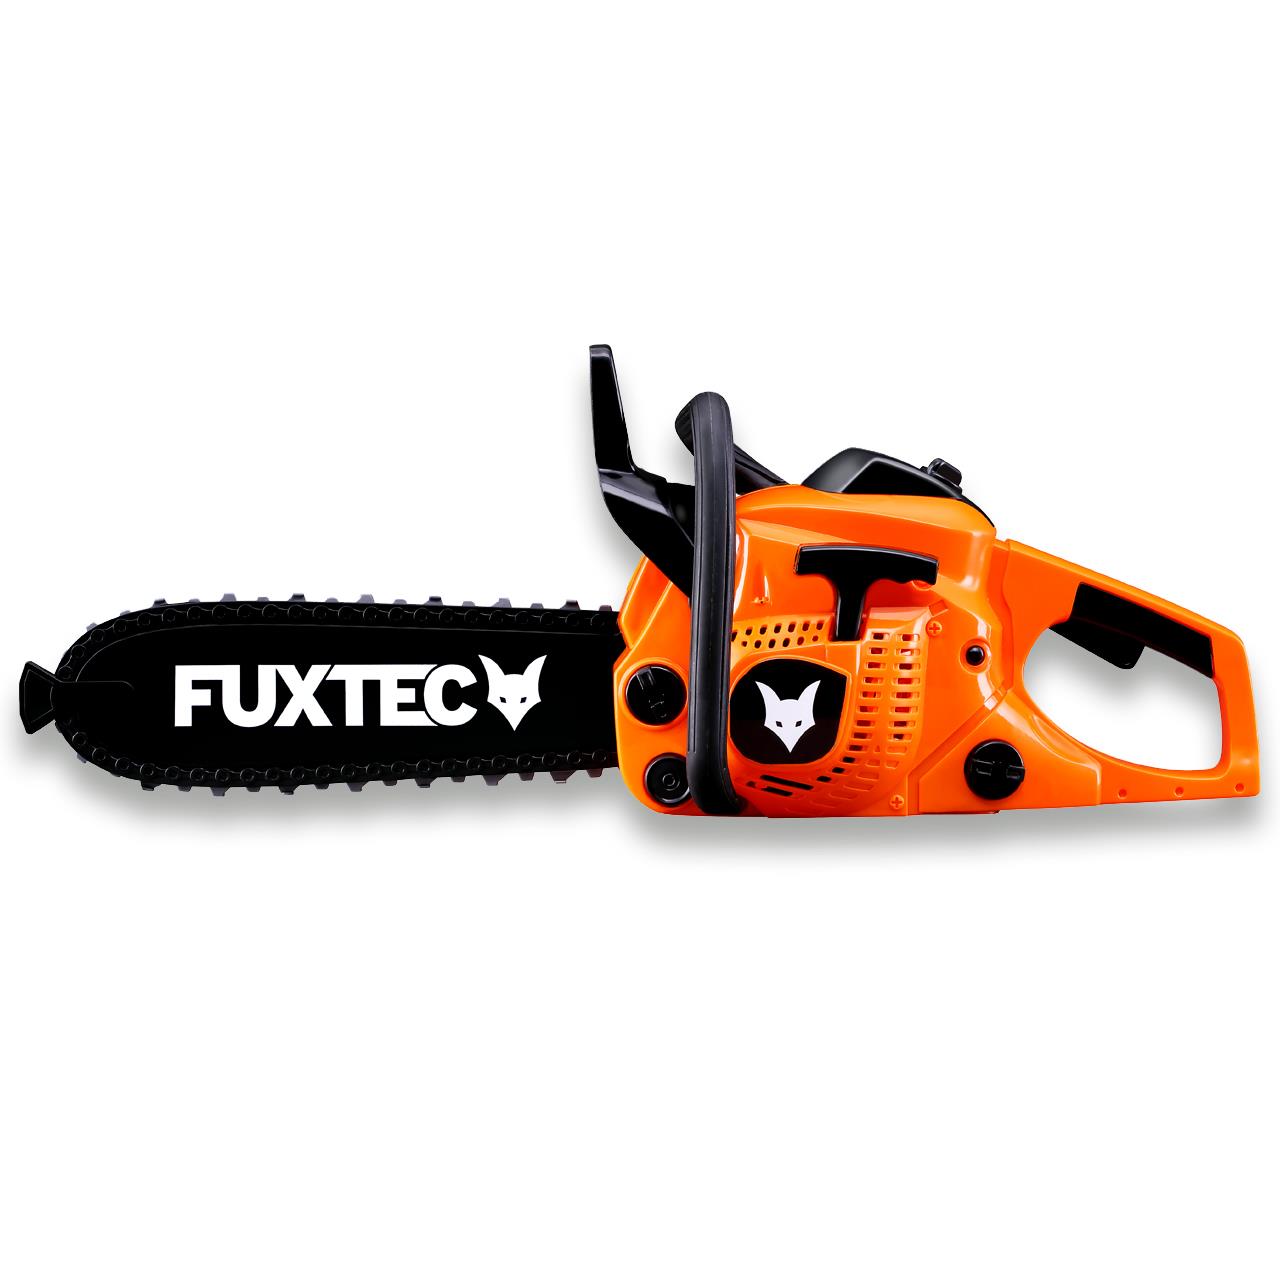 FUXTEC toy chainsaw FX-SKS1